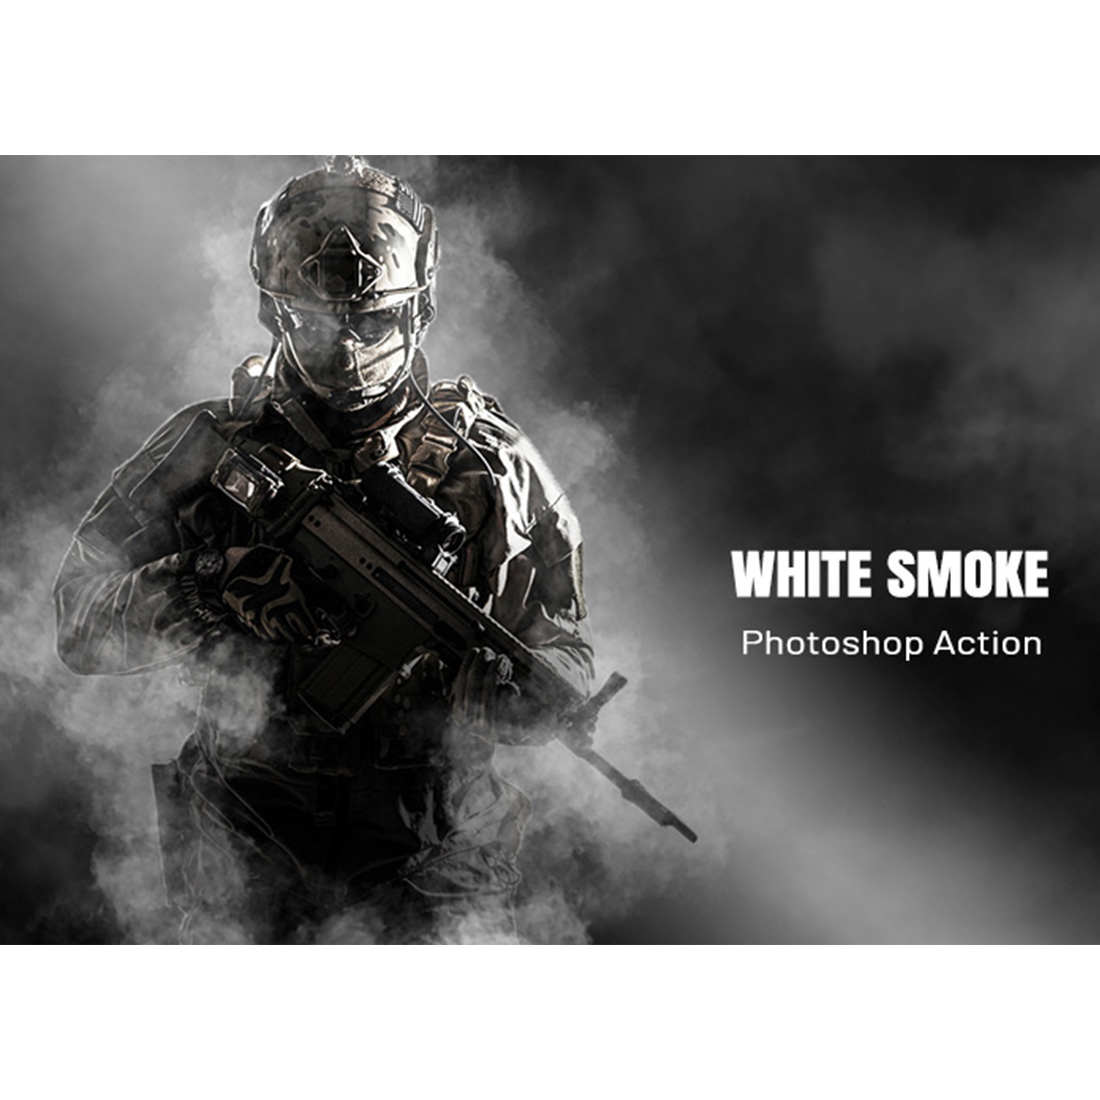 White Smoke Photoshop Action cover image.